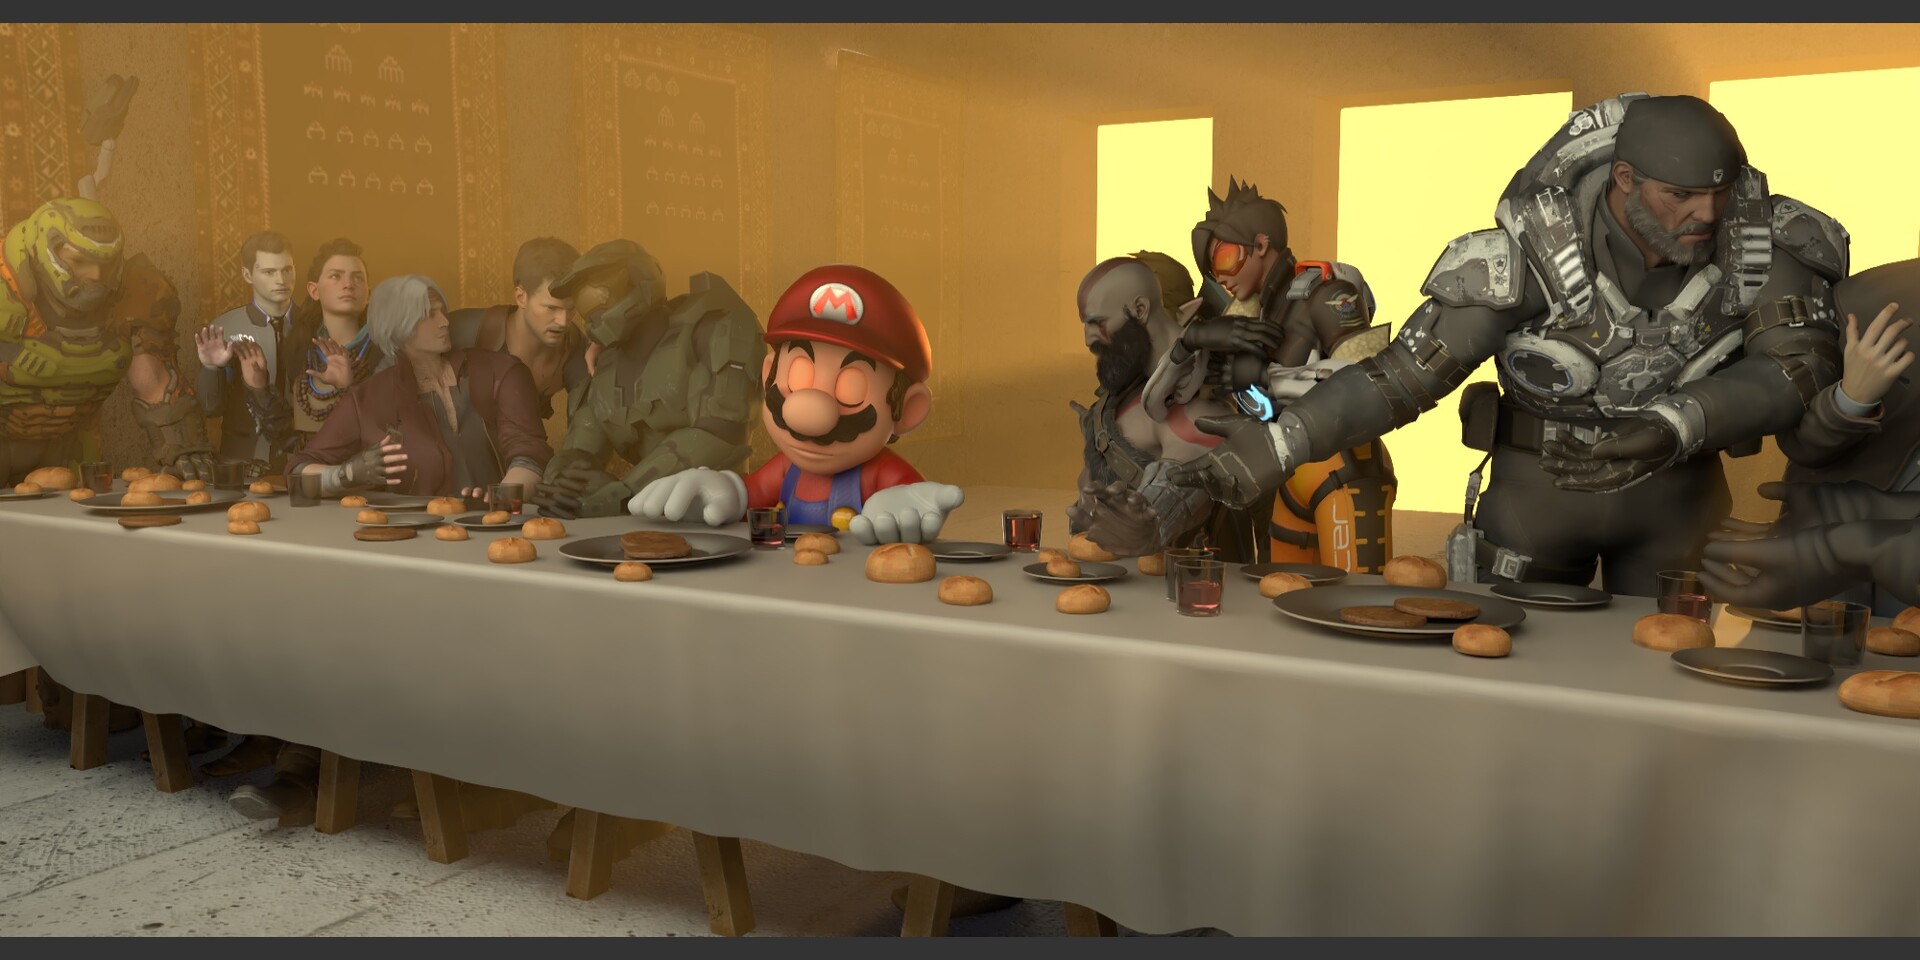 ArtStation - The Last Supper, Video Games